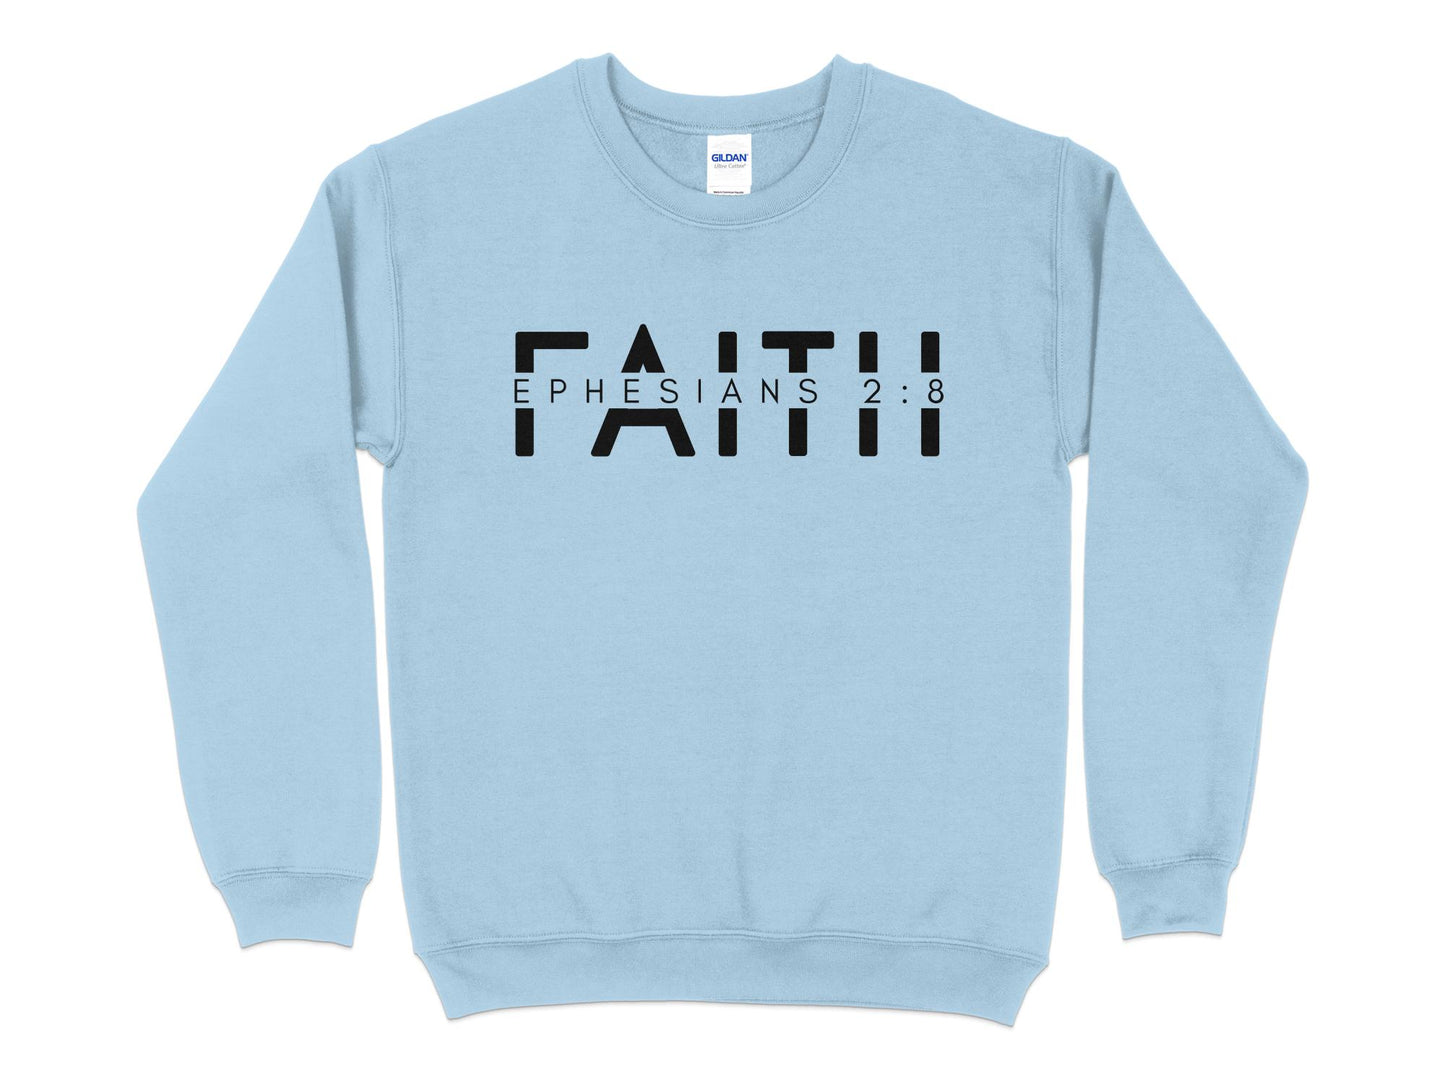 Unisex Faith Ephesians 2:8 Sweatshirt, Bible Verse Christian Pullover, Religious Scripture Soft Cotton Sweater, Casual Wear - Mardonyx Sweatshirt S / Light Blue